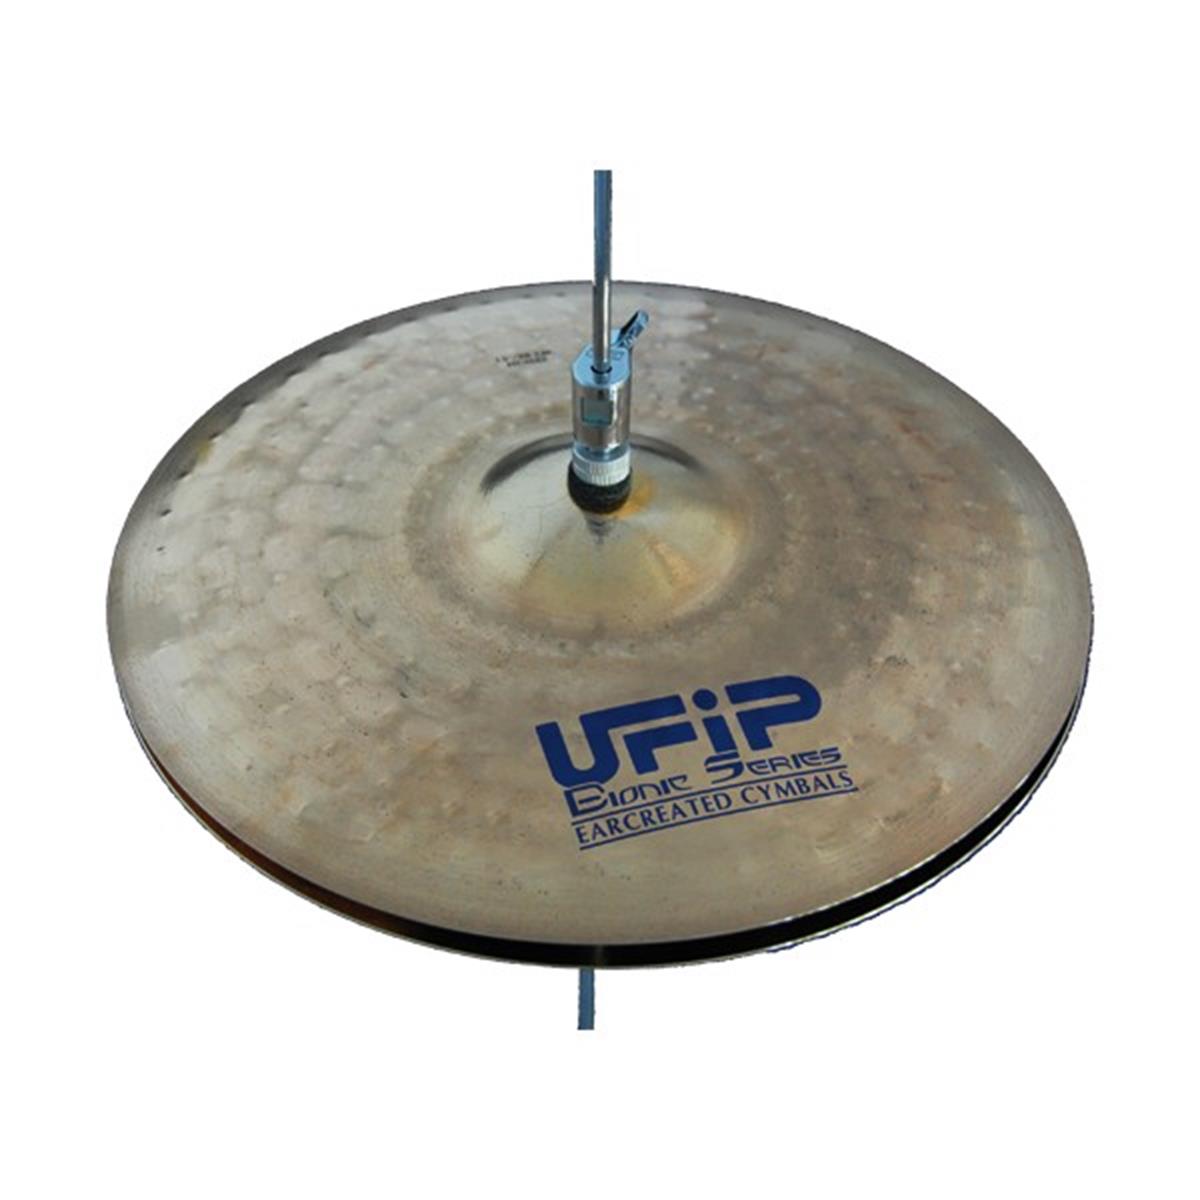 UFIP BIONIC HI HAT 13 - Batterie / Percussioni Piatti - Hihat